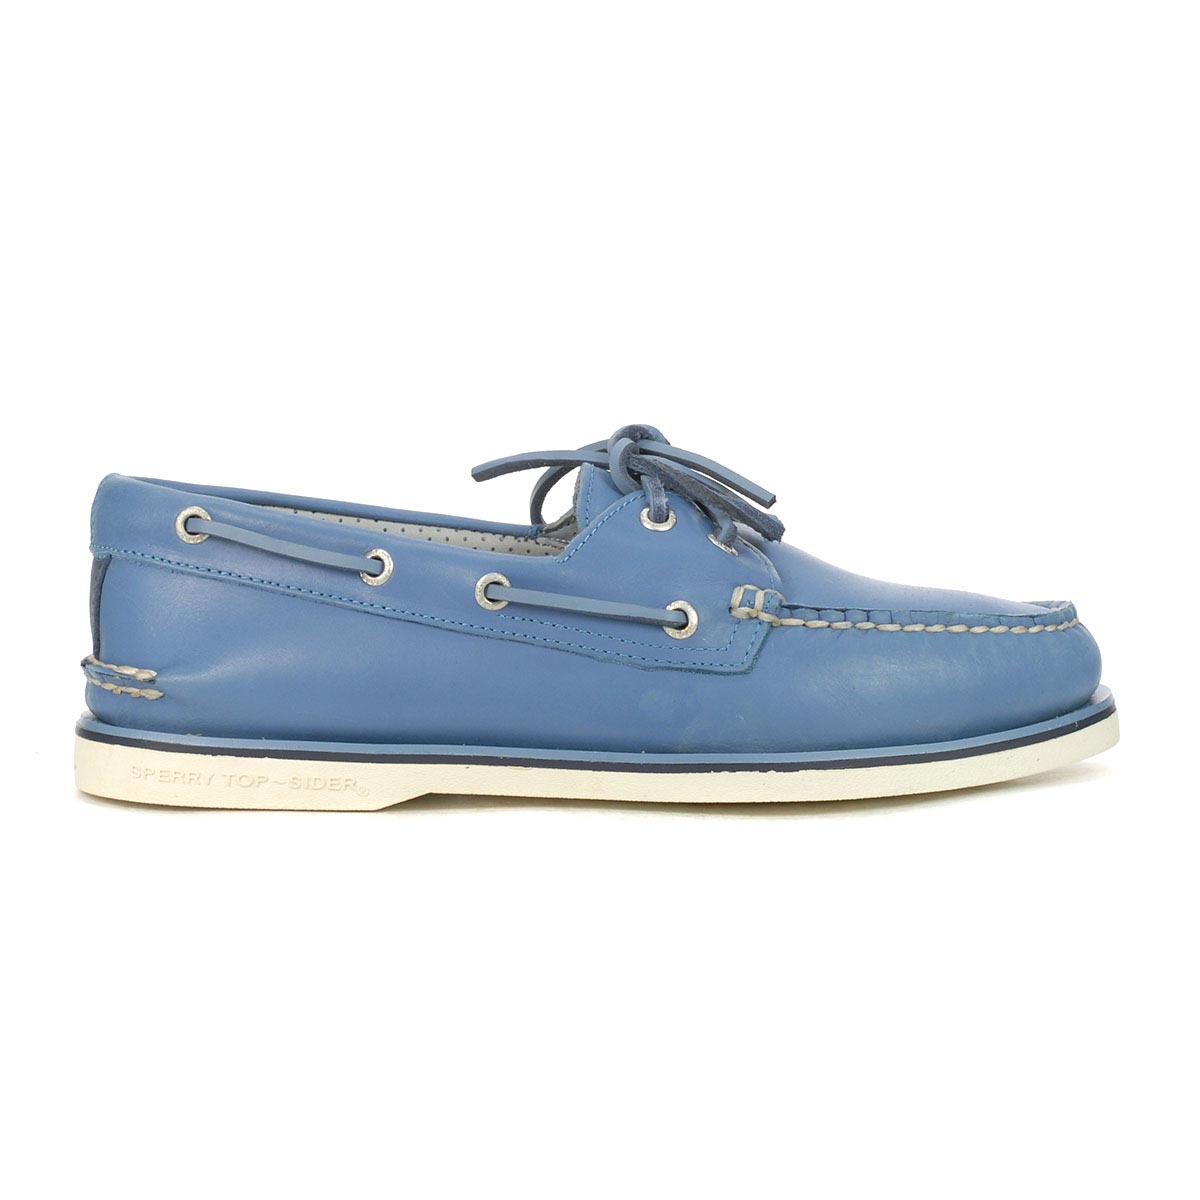 Sperry Men's Gold Cup Authentic Original Blue Boat Shoes - WOOKI.COM